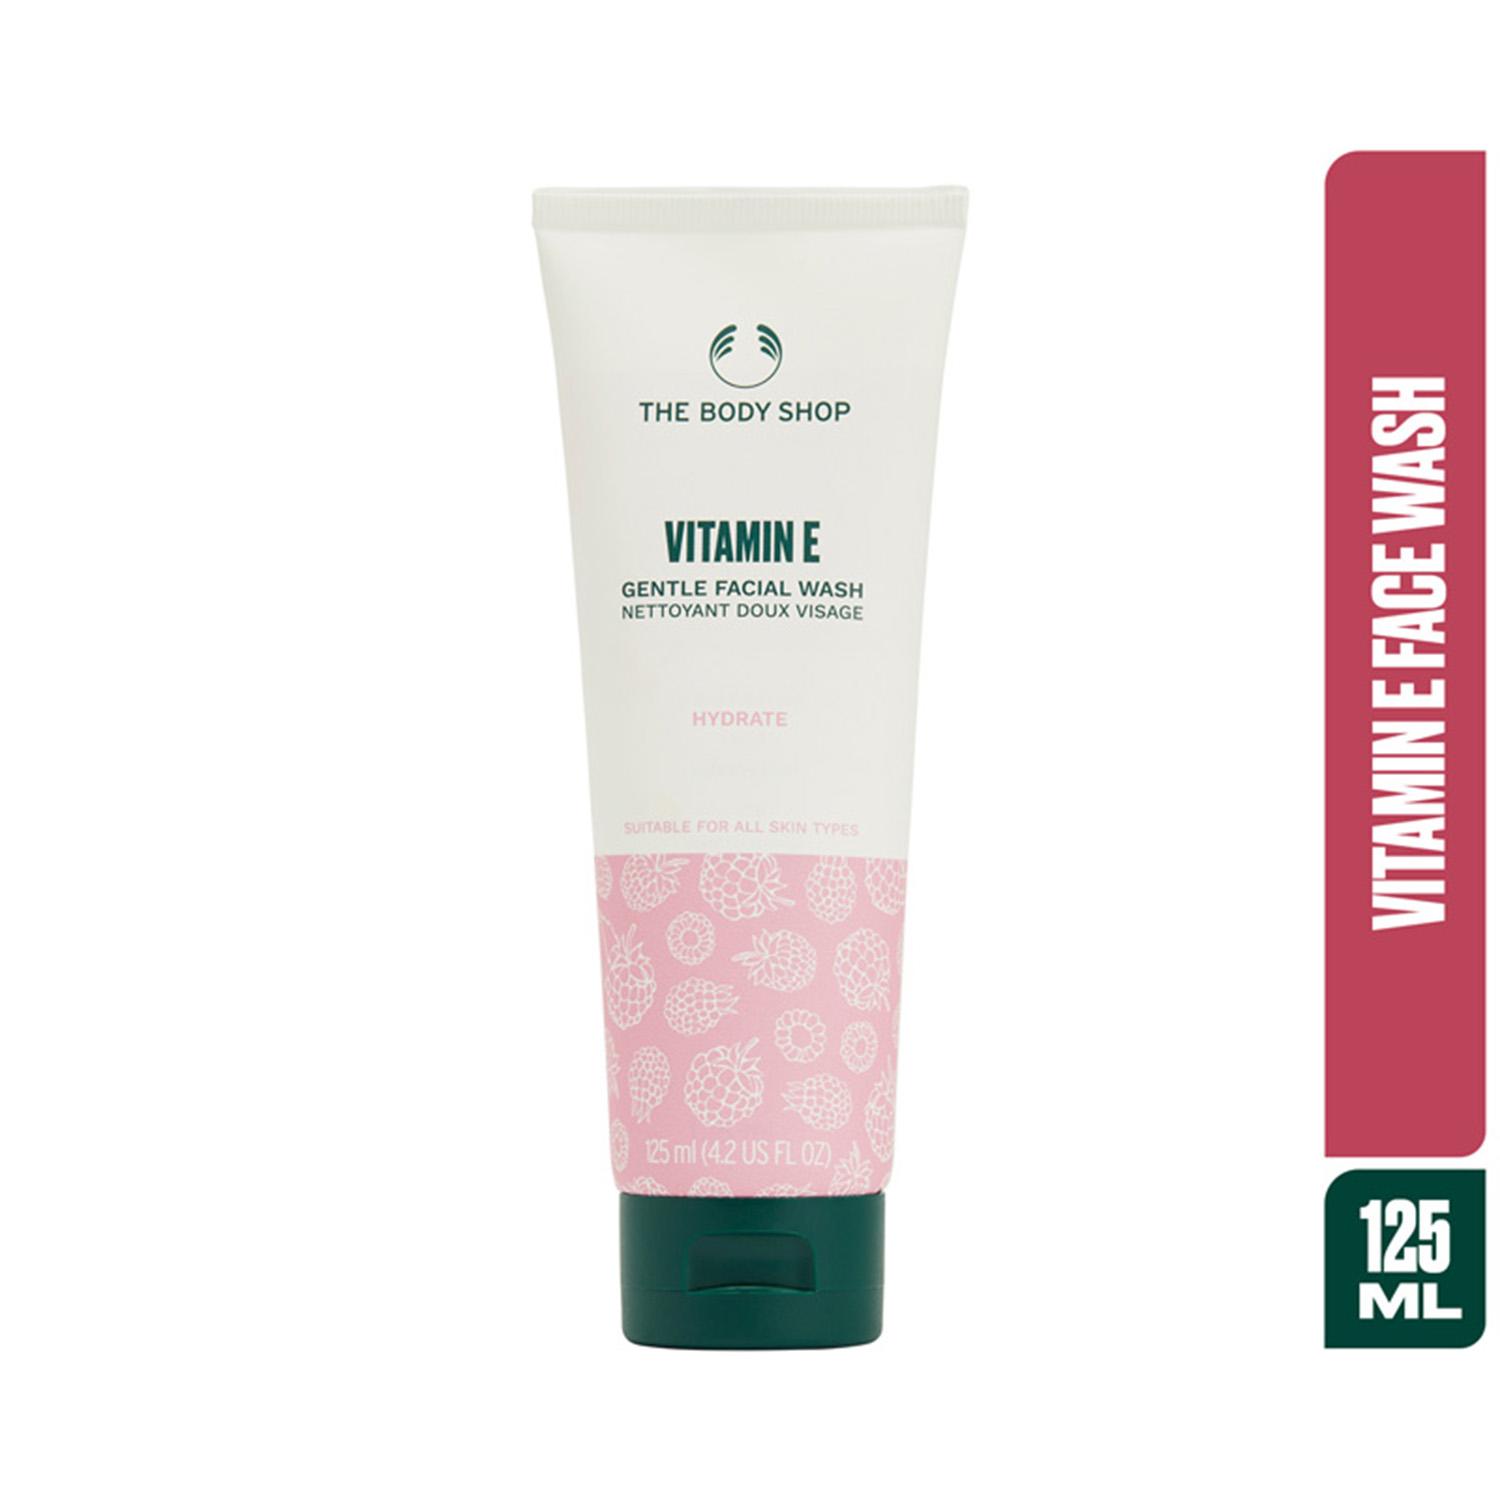 The Body Shop | The Body Shop Vitamin E Face Wash (125ml)